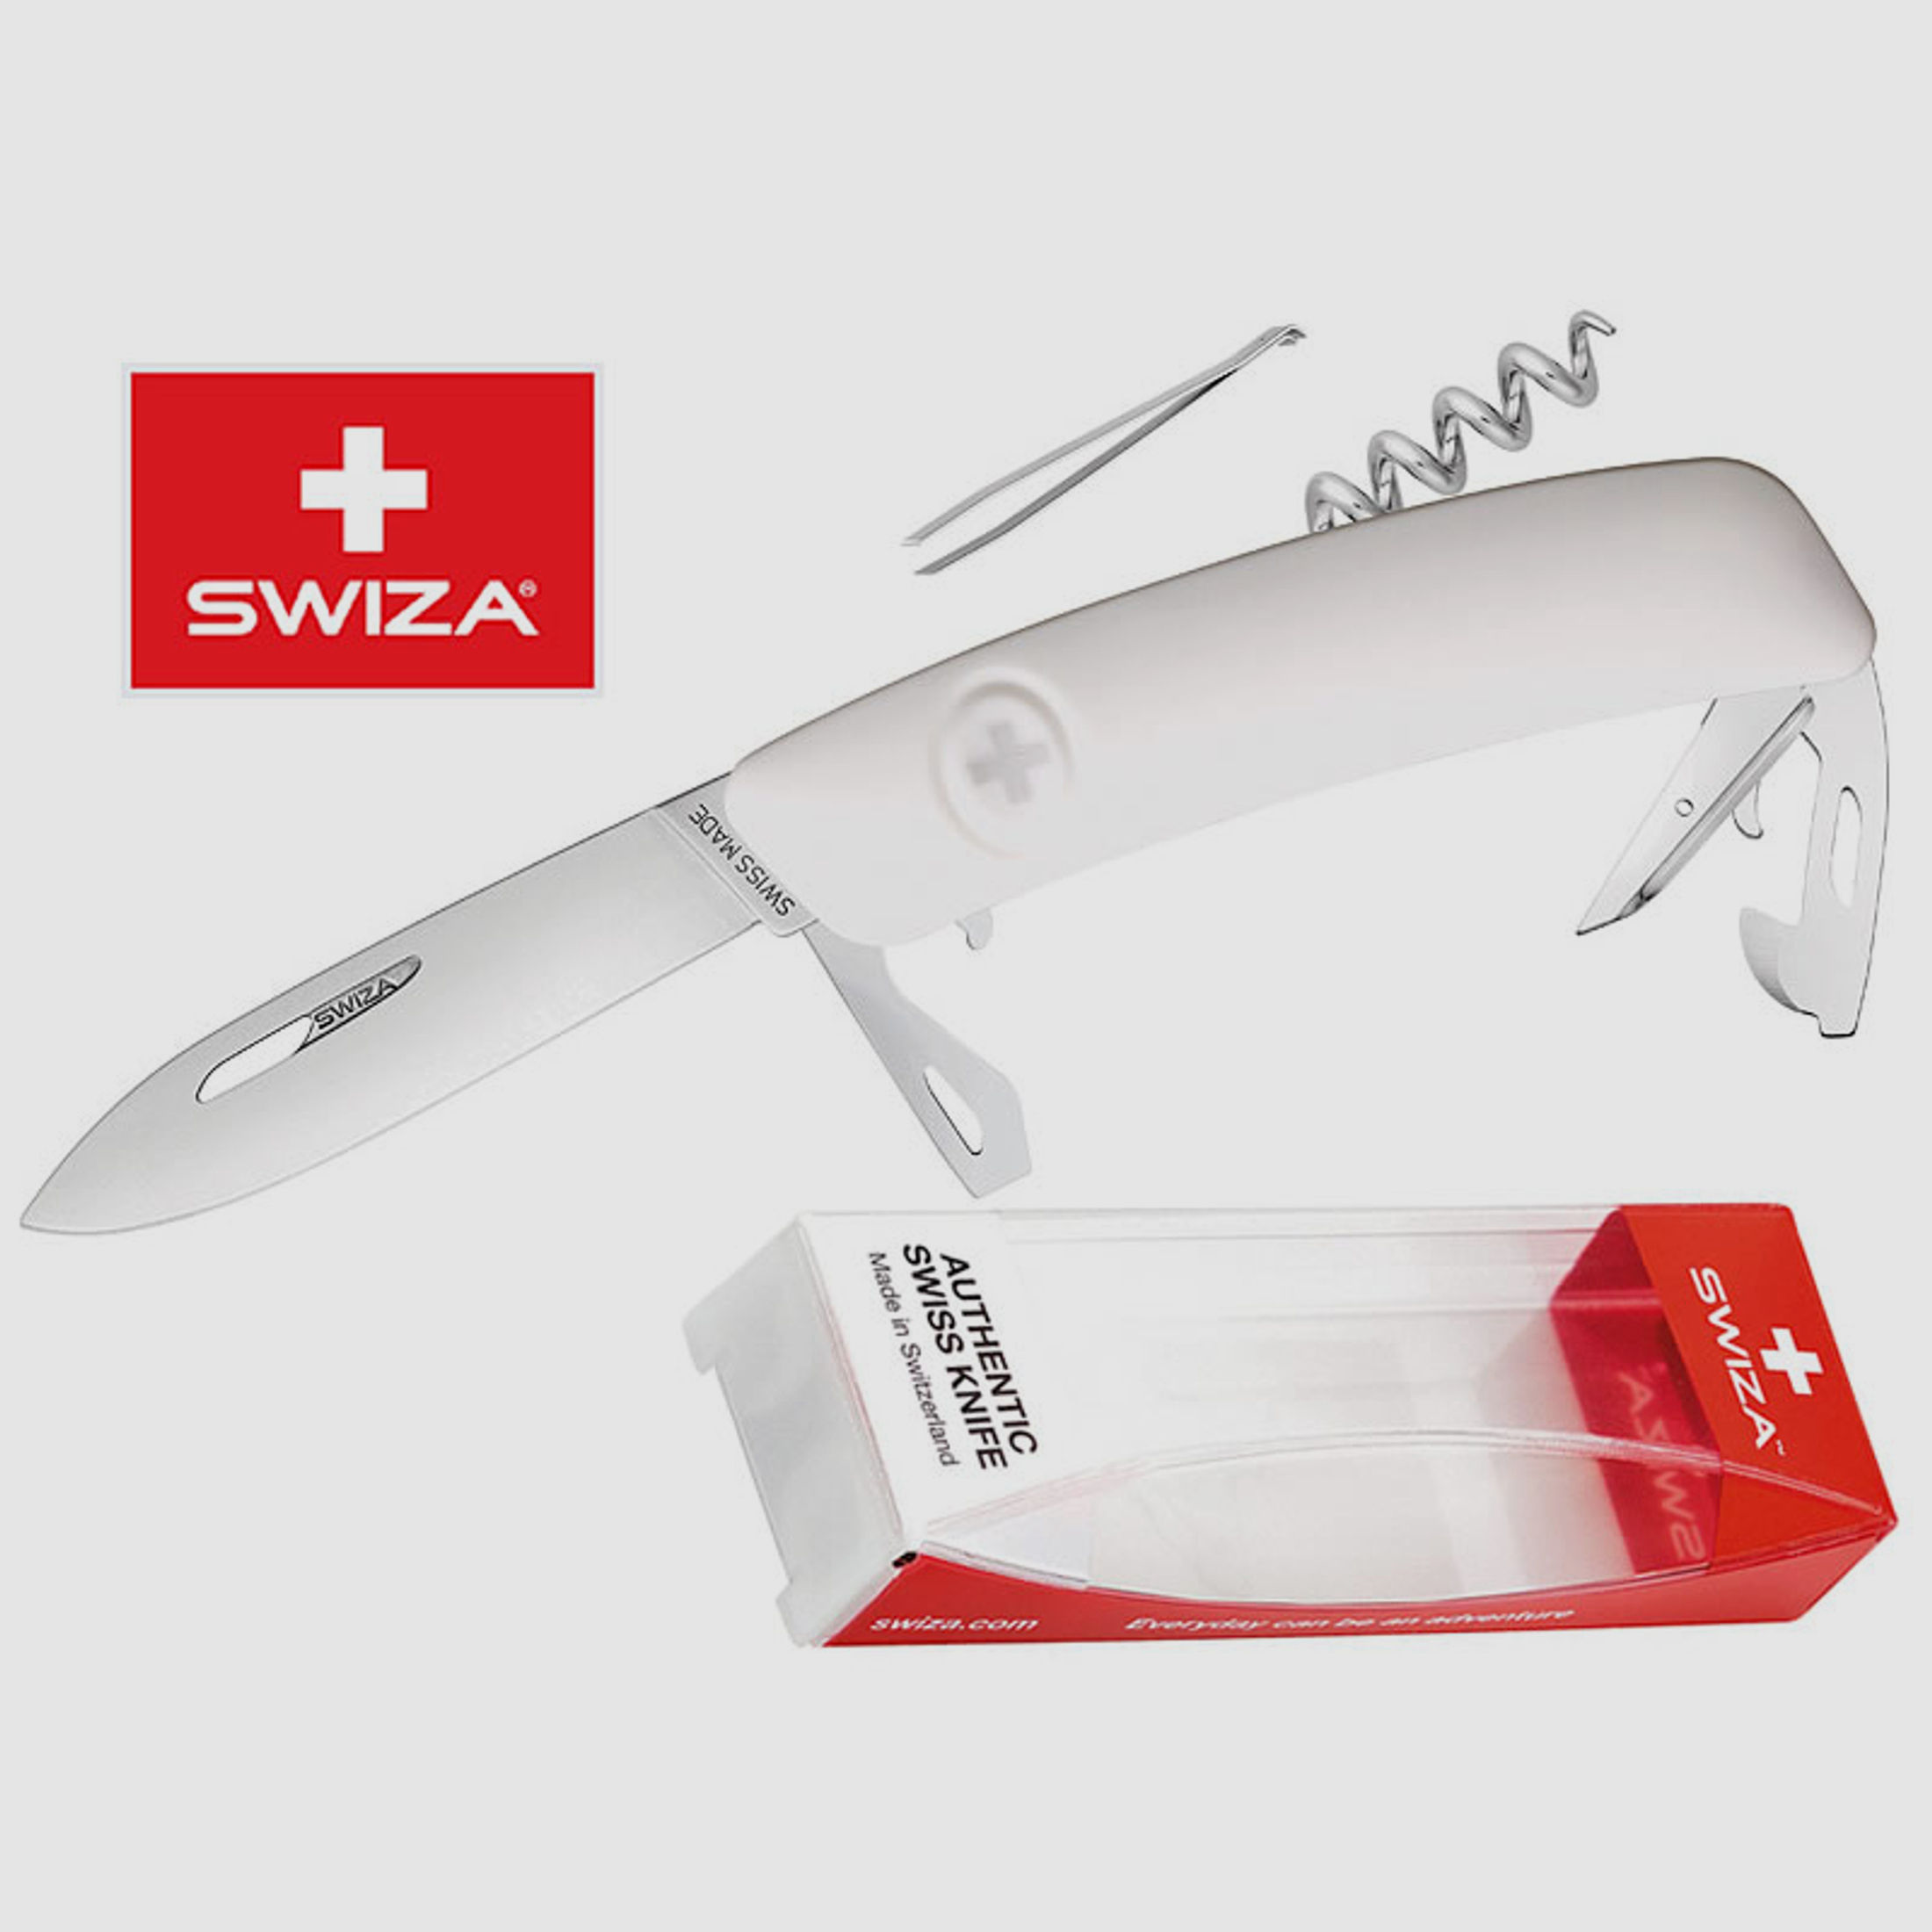 SWIZA Schweizer Messer D03, weiss, Edelstahl 440, 11 Funktionen, Korkenzieher, Multi-Tool